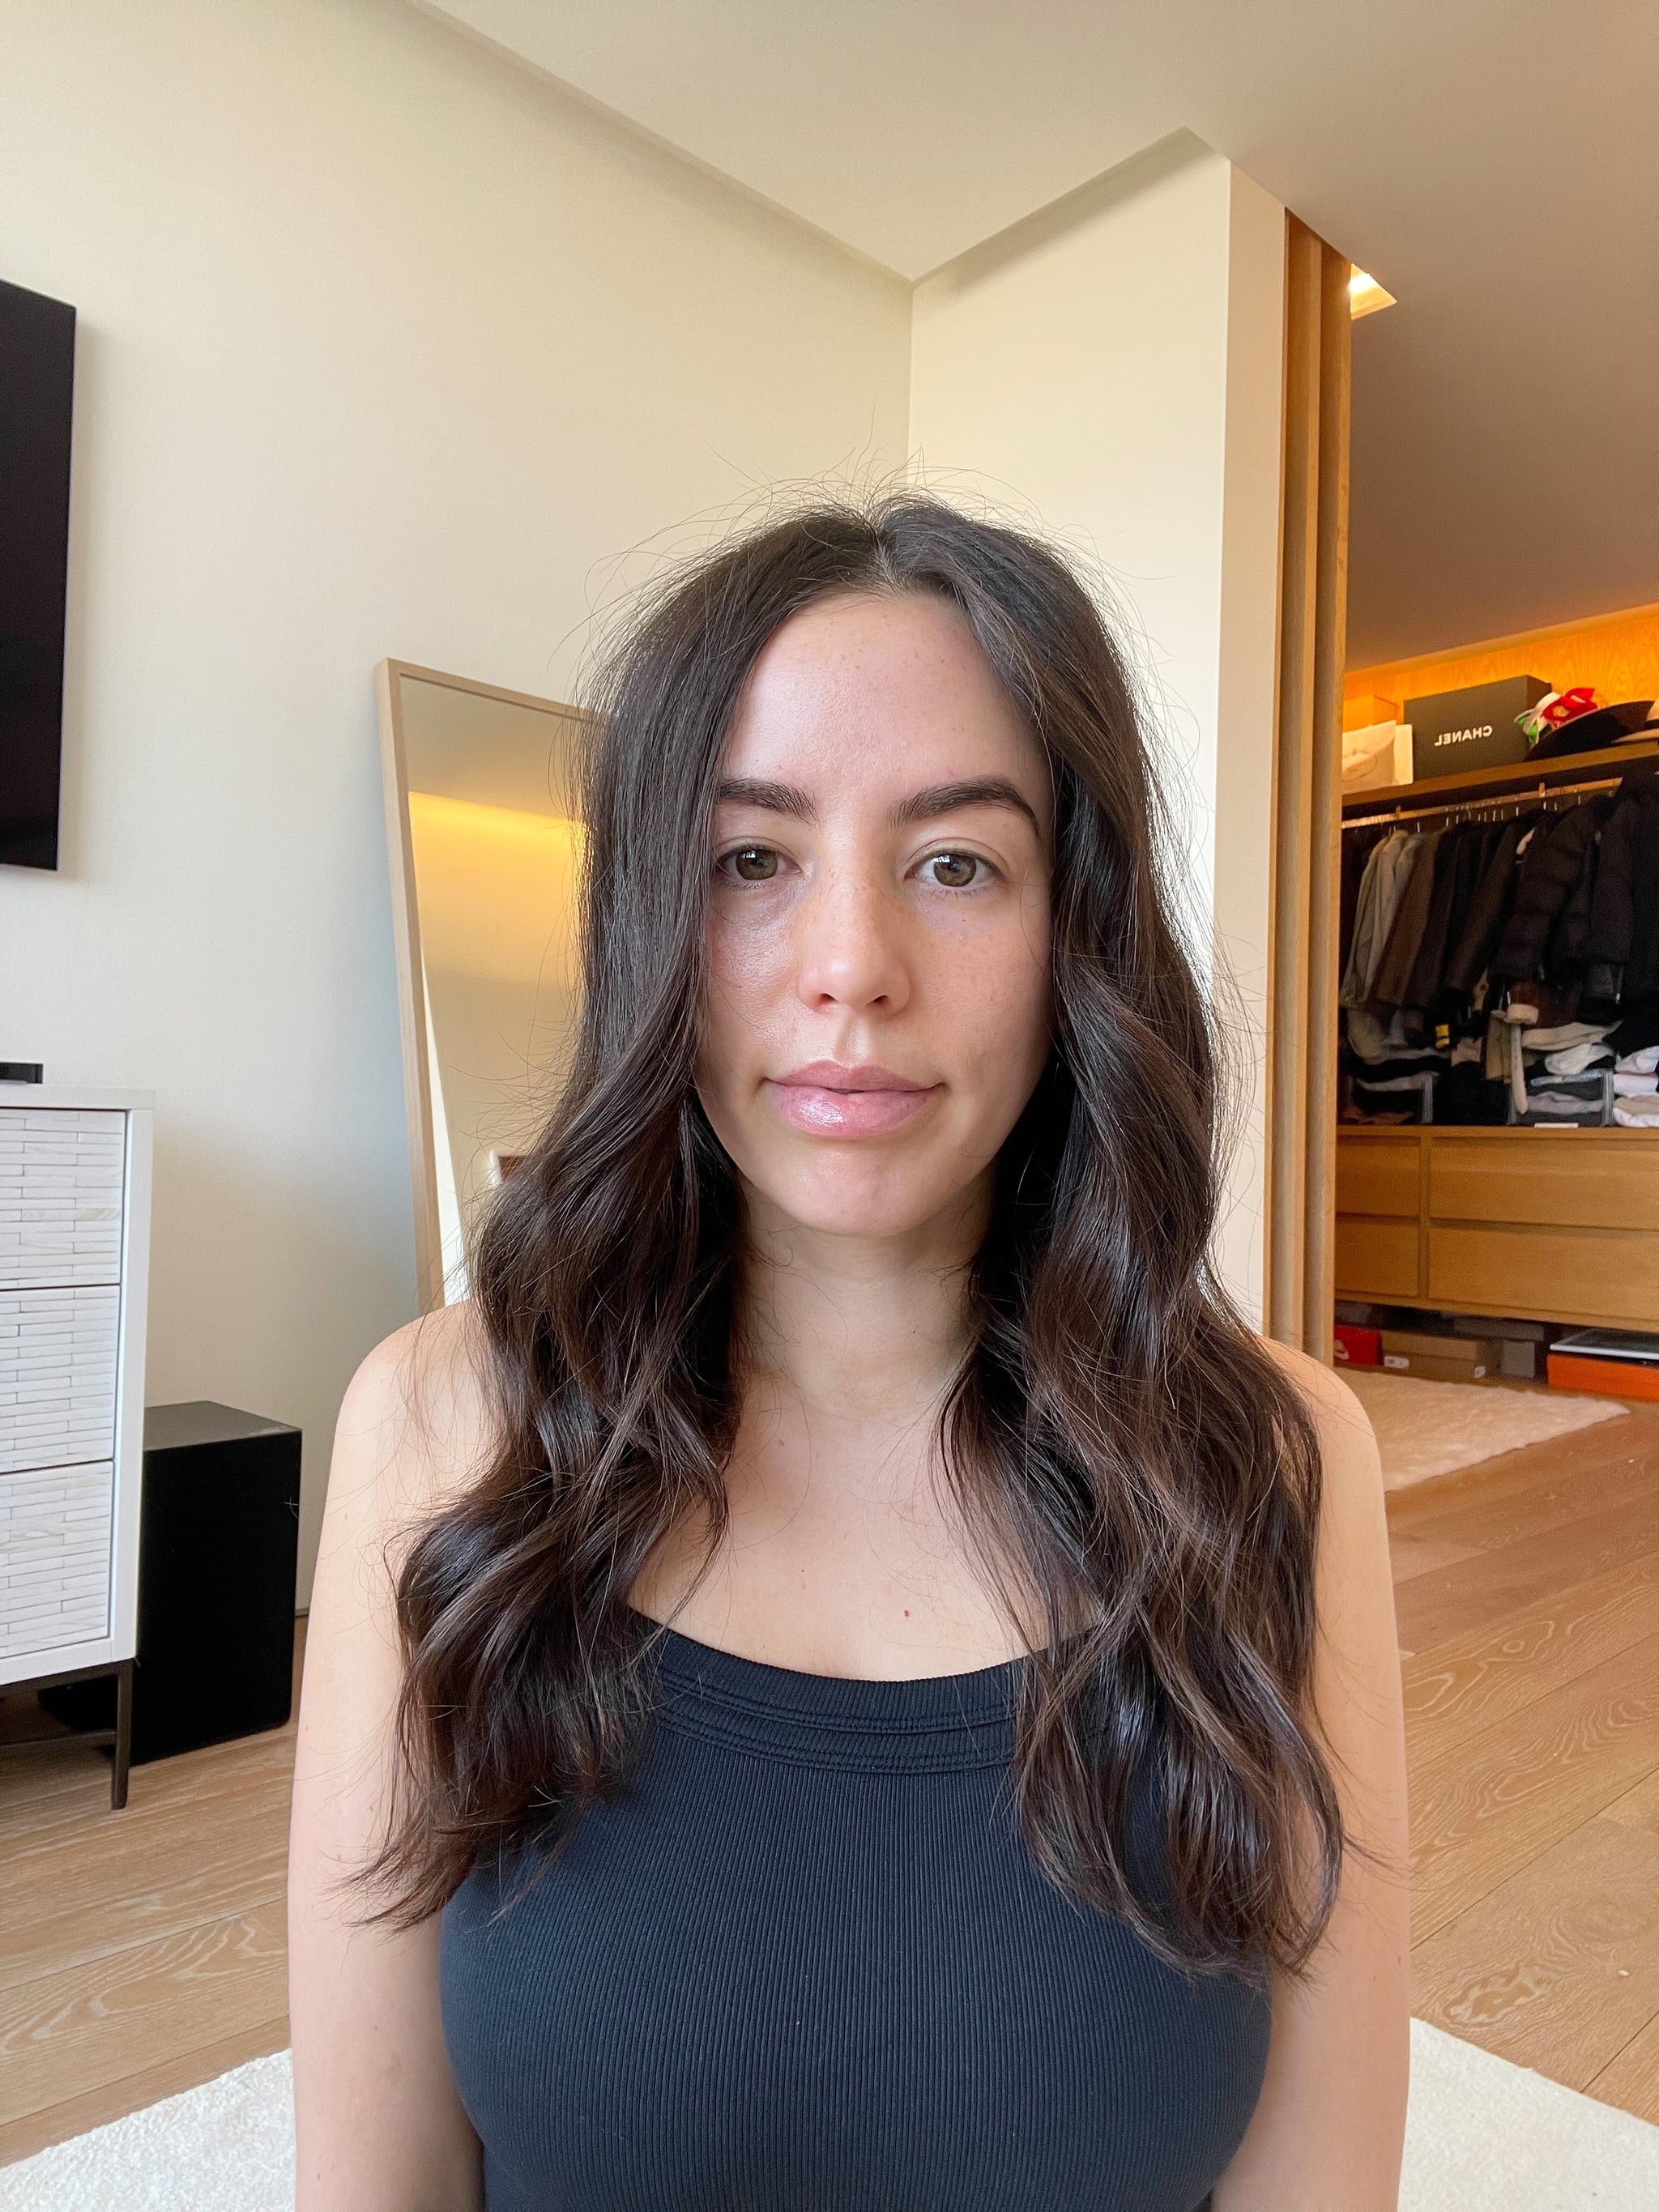 TikTok Face Framing Curl Hack -- Contour Face With Hair